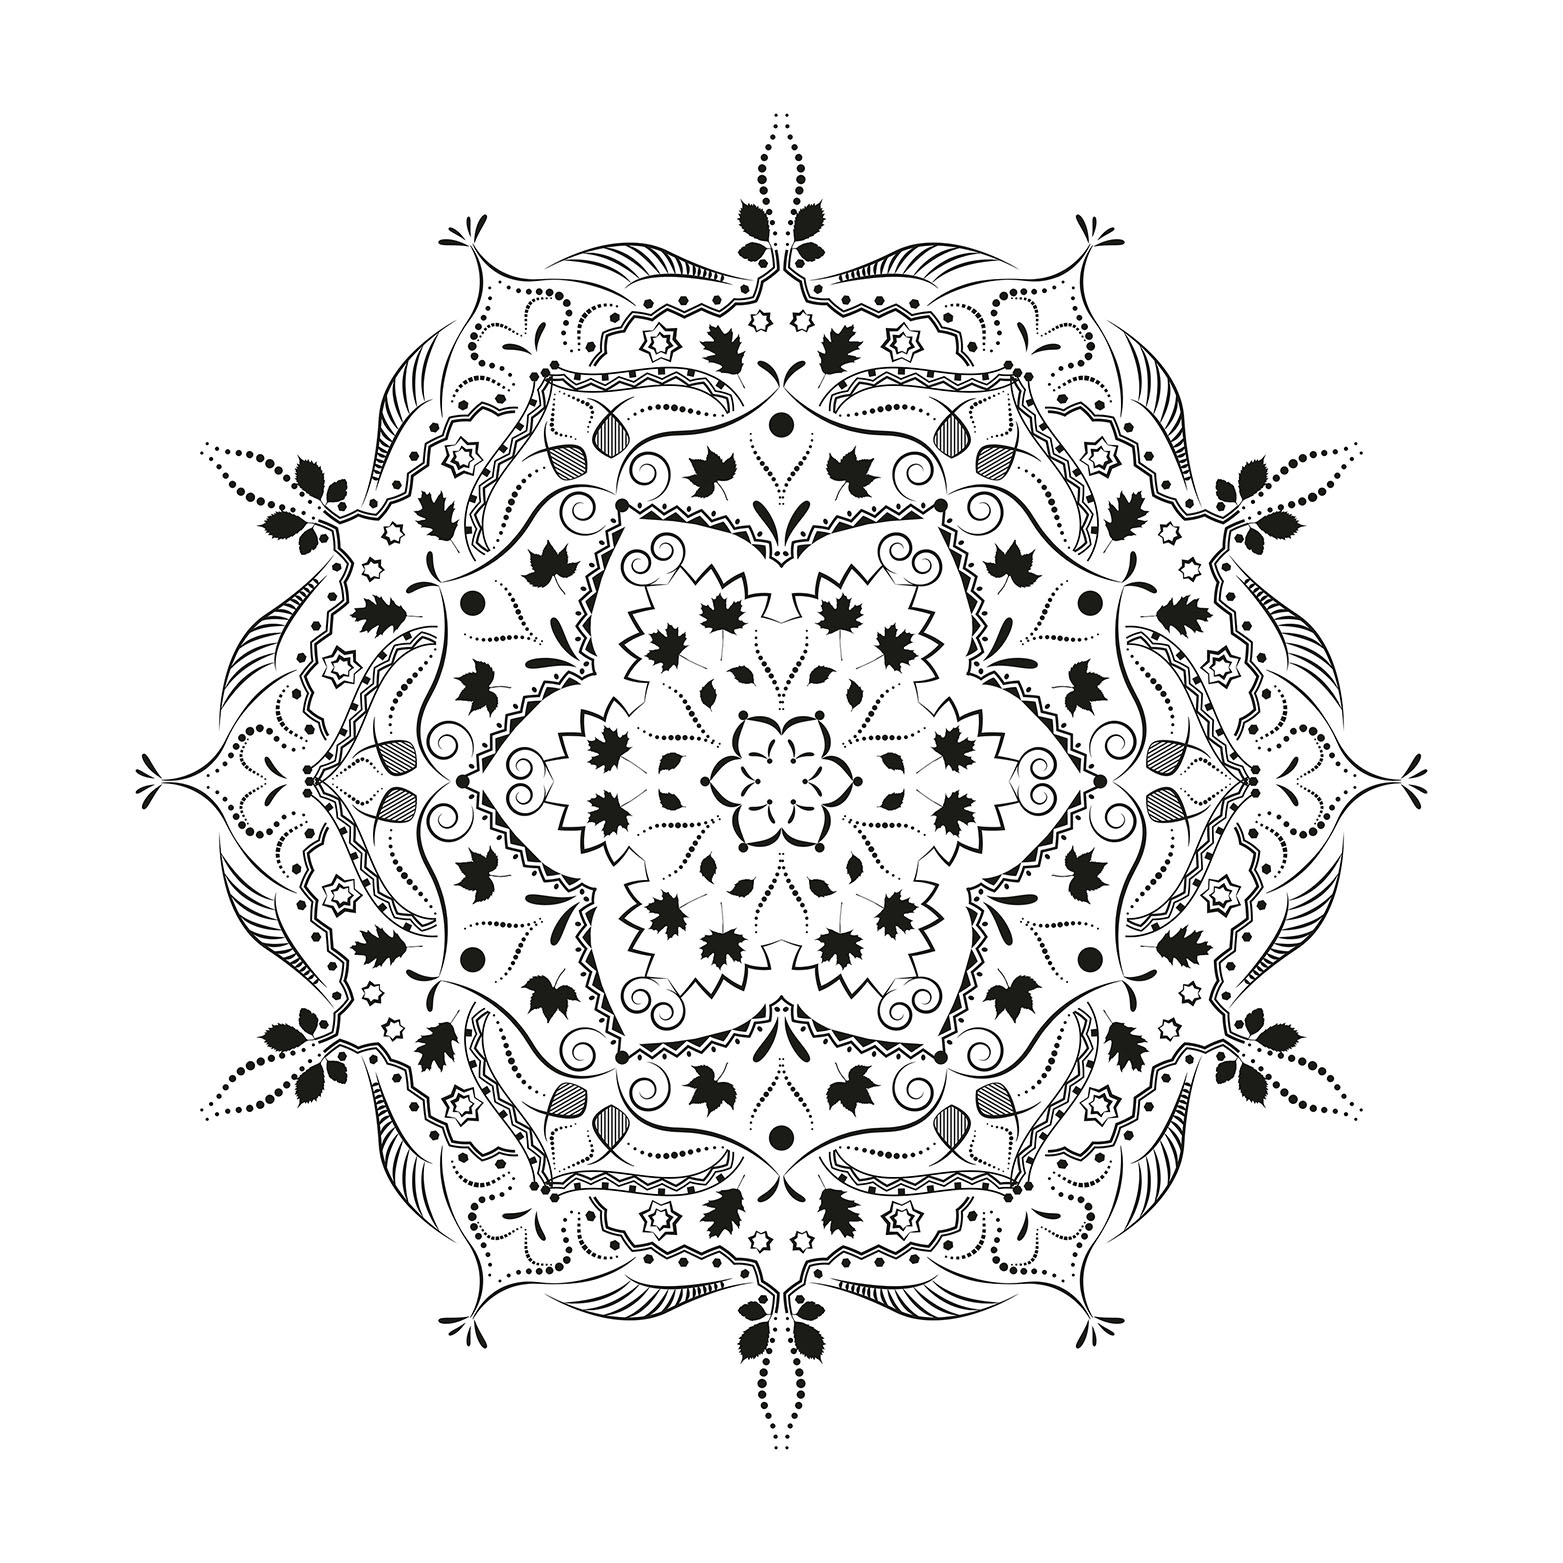 vector art work of mandala black and white pattern 4 3000x3000 px copy copy min 838